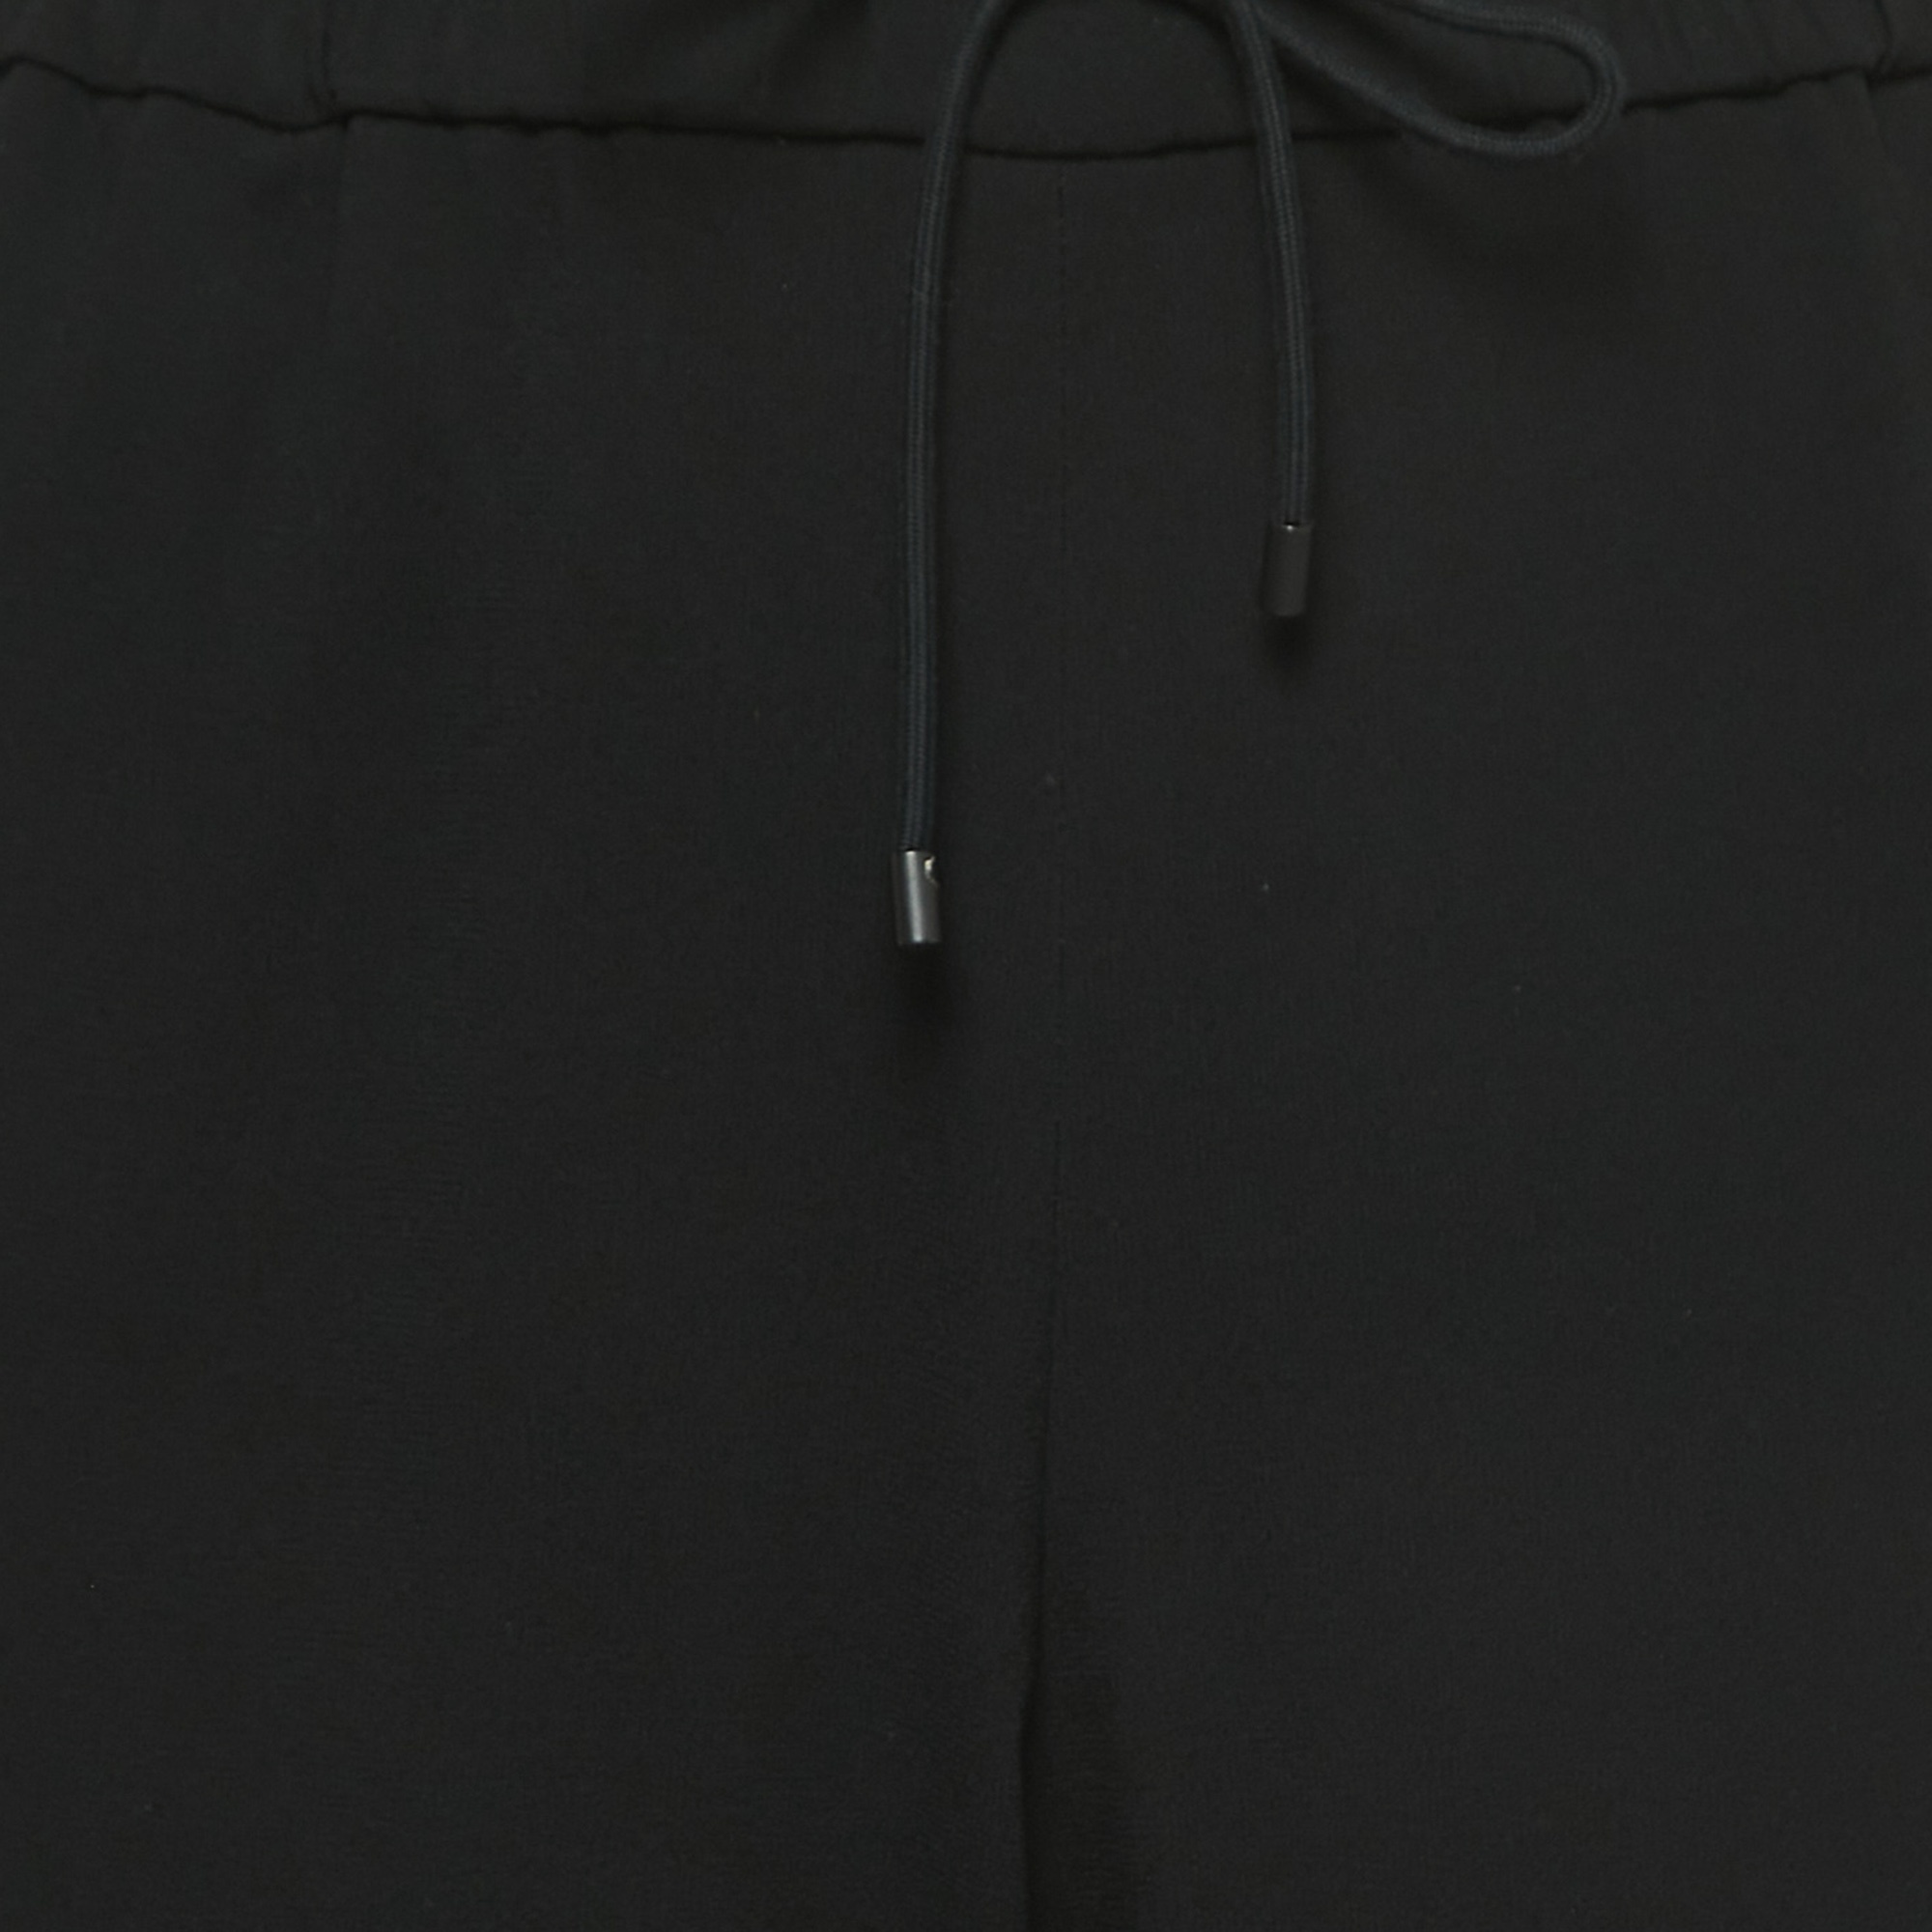 Kenzo Black Crepe Side Striped Drawstring Track Pants M